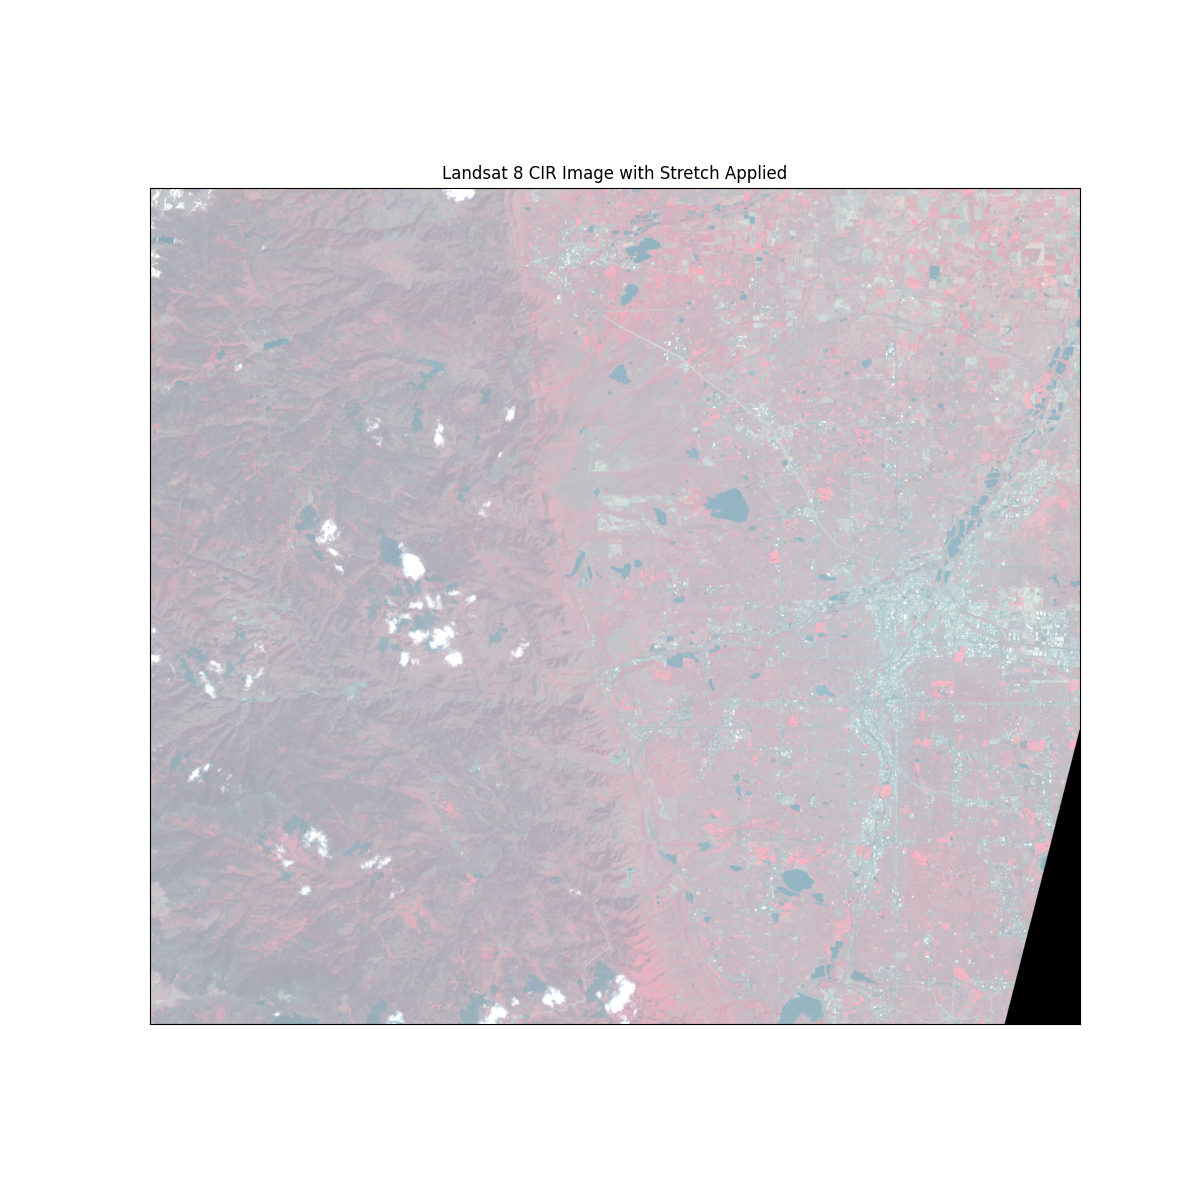 Landsat 8 CIR Image with Stretch Applied